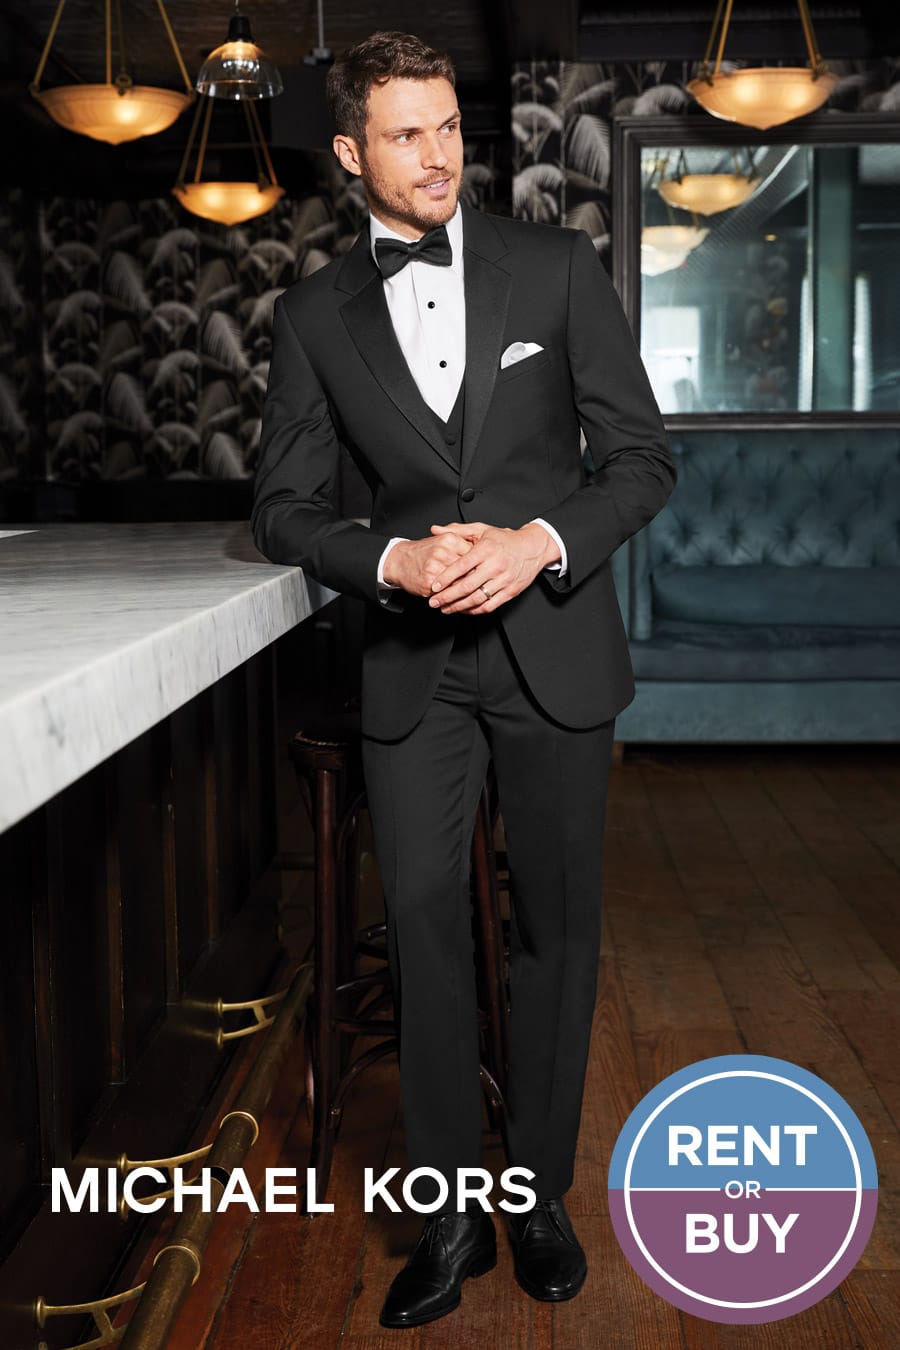 Michael Kors Black Performance Tuxedo Rent or Buy for your wedding